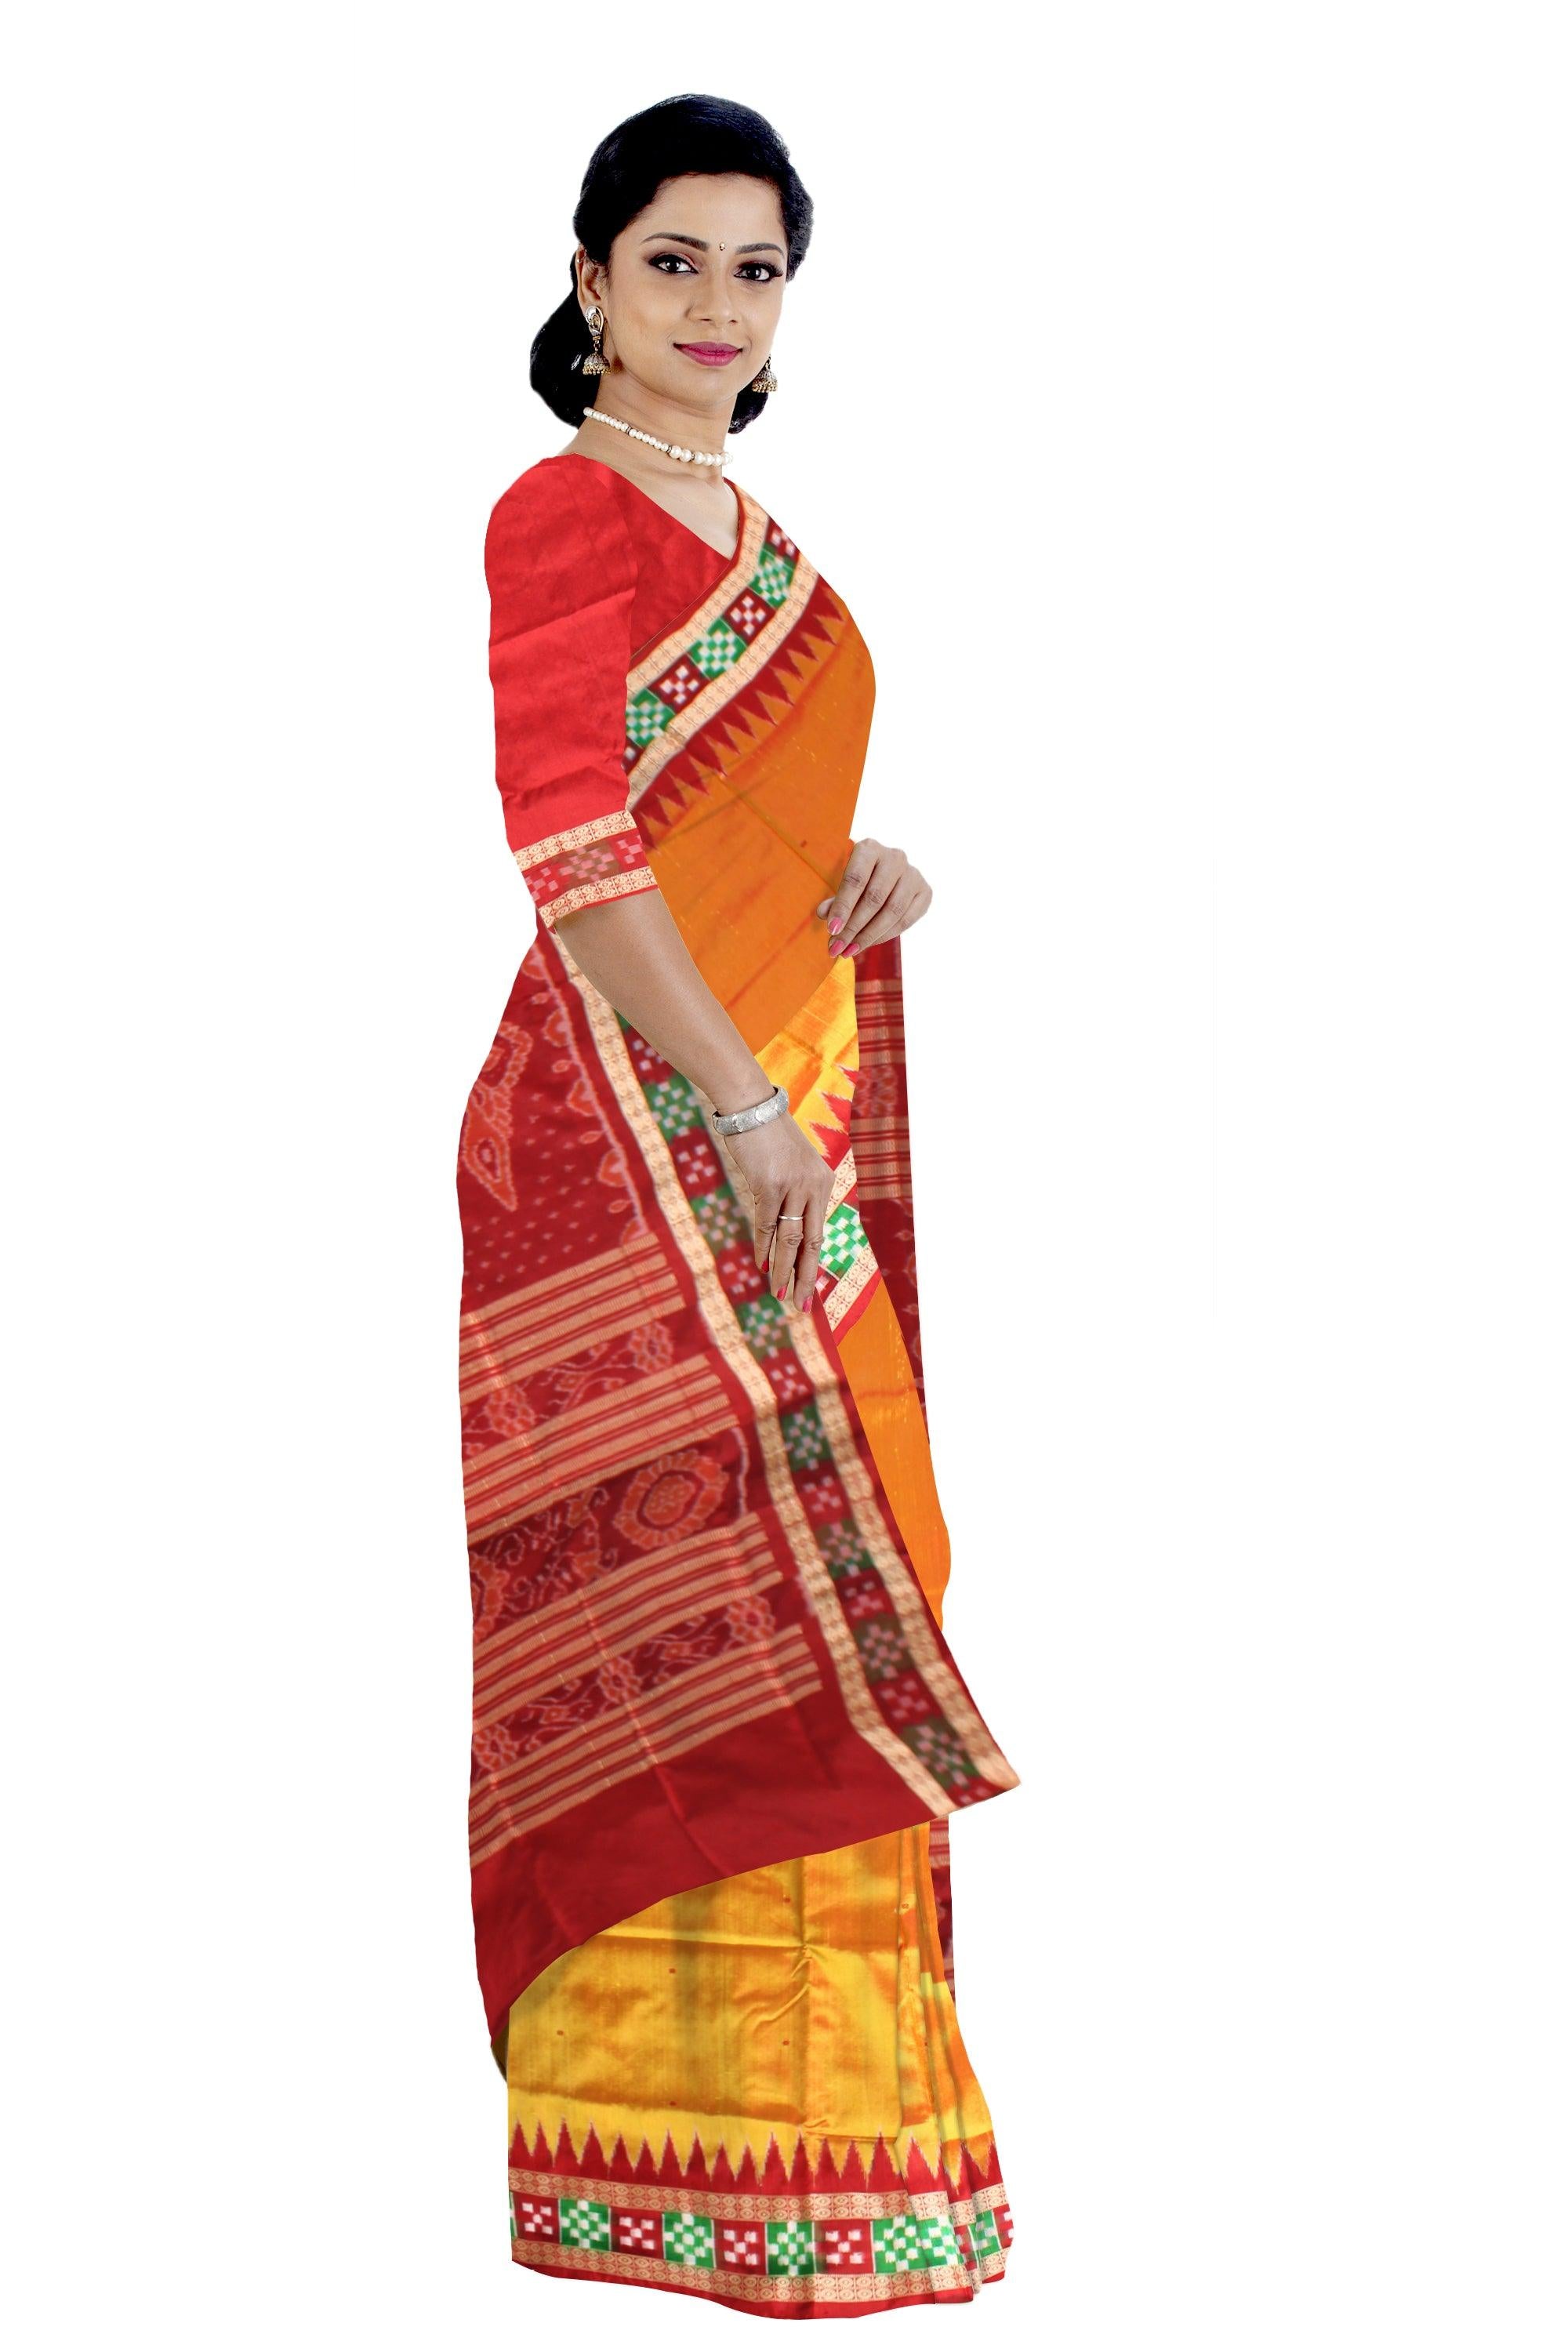 Sambalpuri Pata Saree in Yellow color Dhadi Pasapali Design with blouse piece. - Koshali Arts & Crafts Enterprise